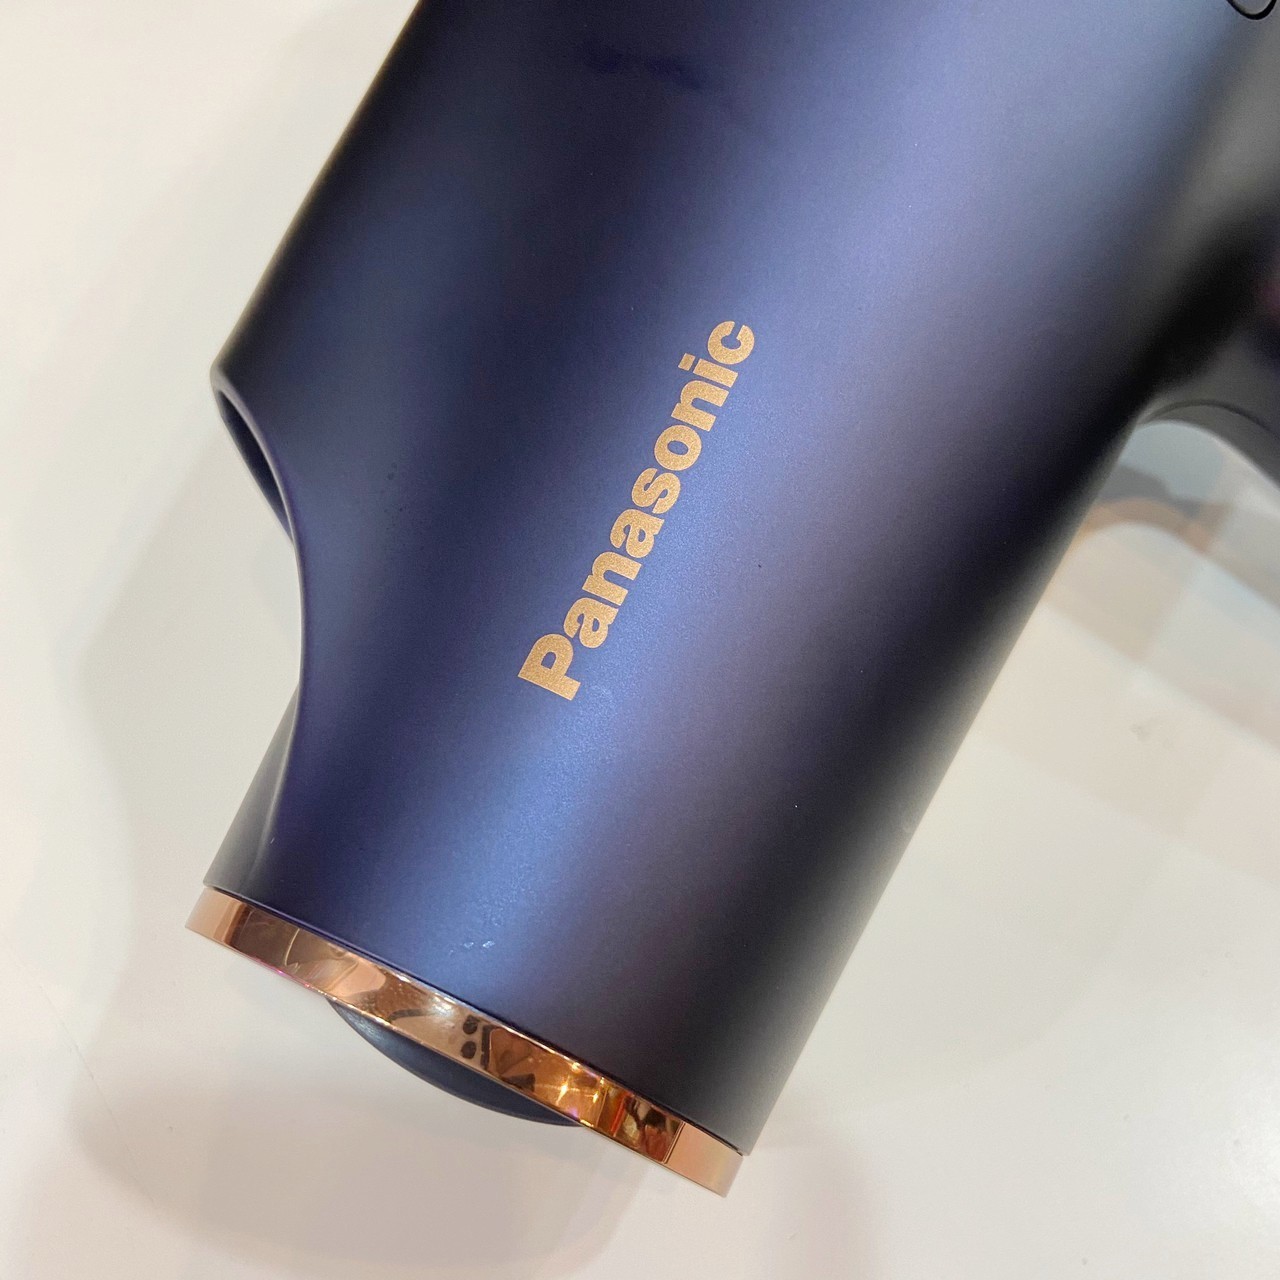 Panasonic 國際 奈米水離子吹風機 EH-NA0E 高滲透超進化